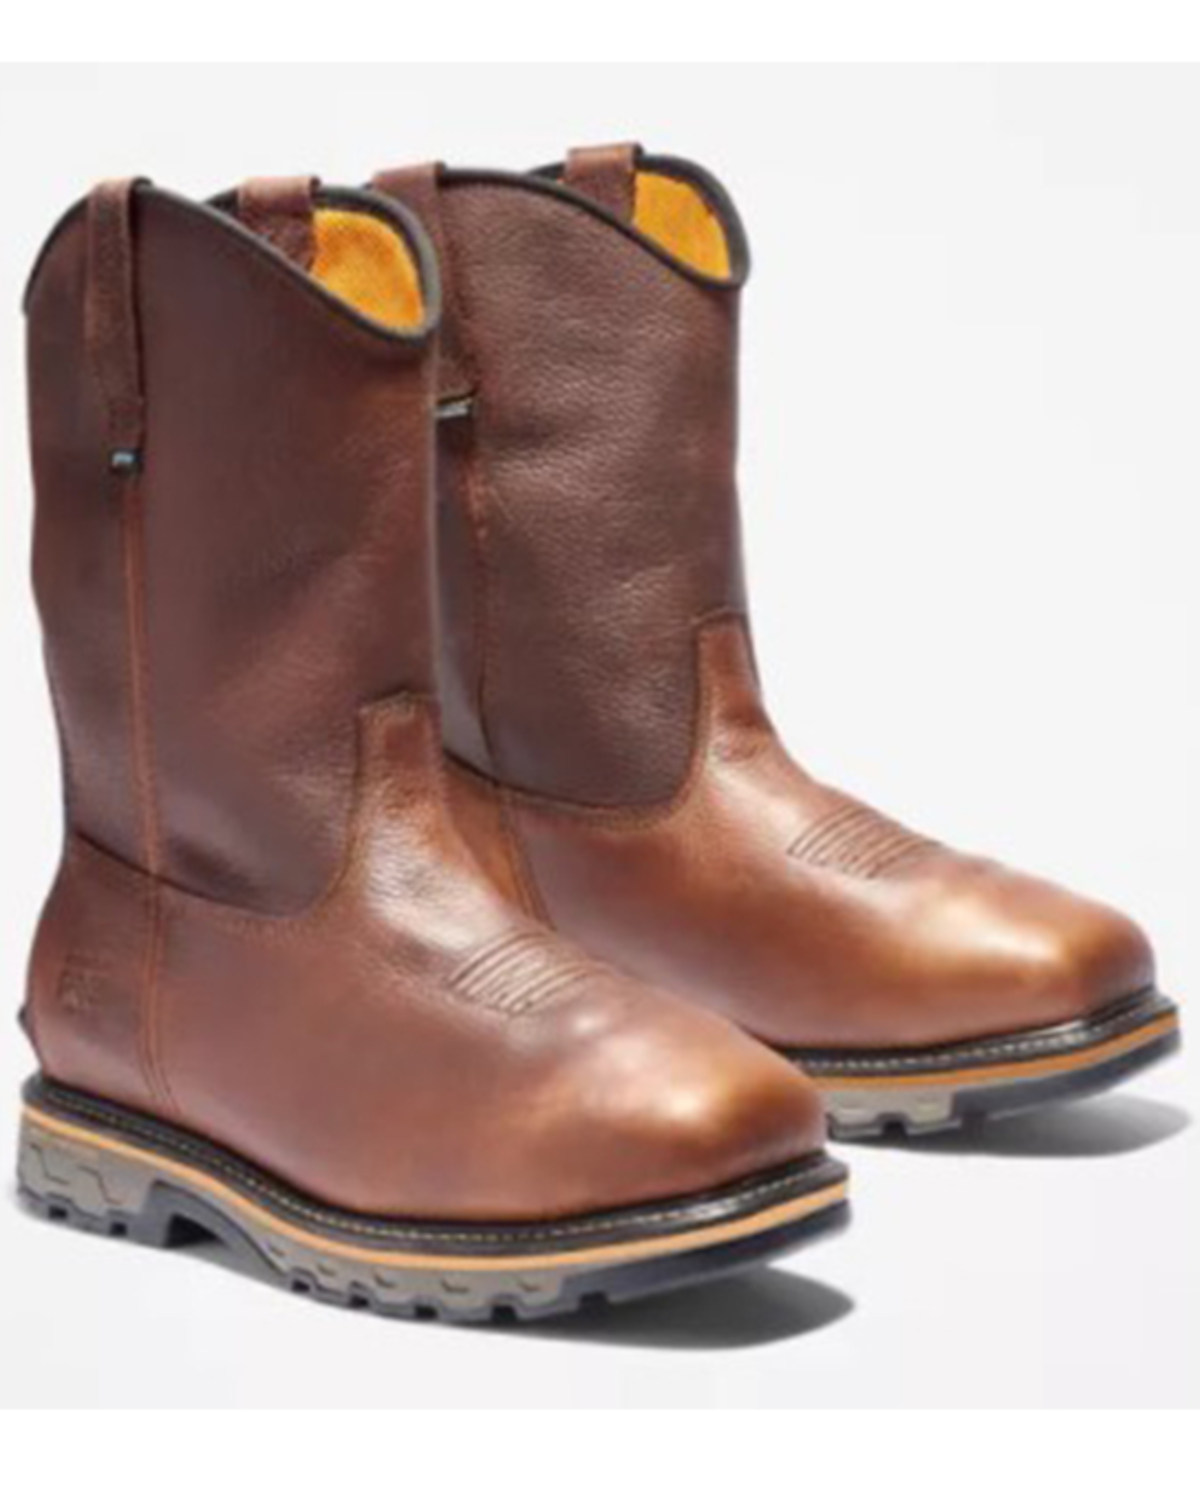 Timberland Men's True Grit Pull-On Met Guard Waterproof Work Boots - Square Toe